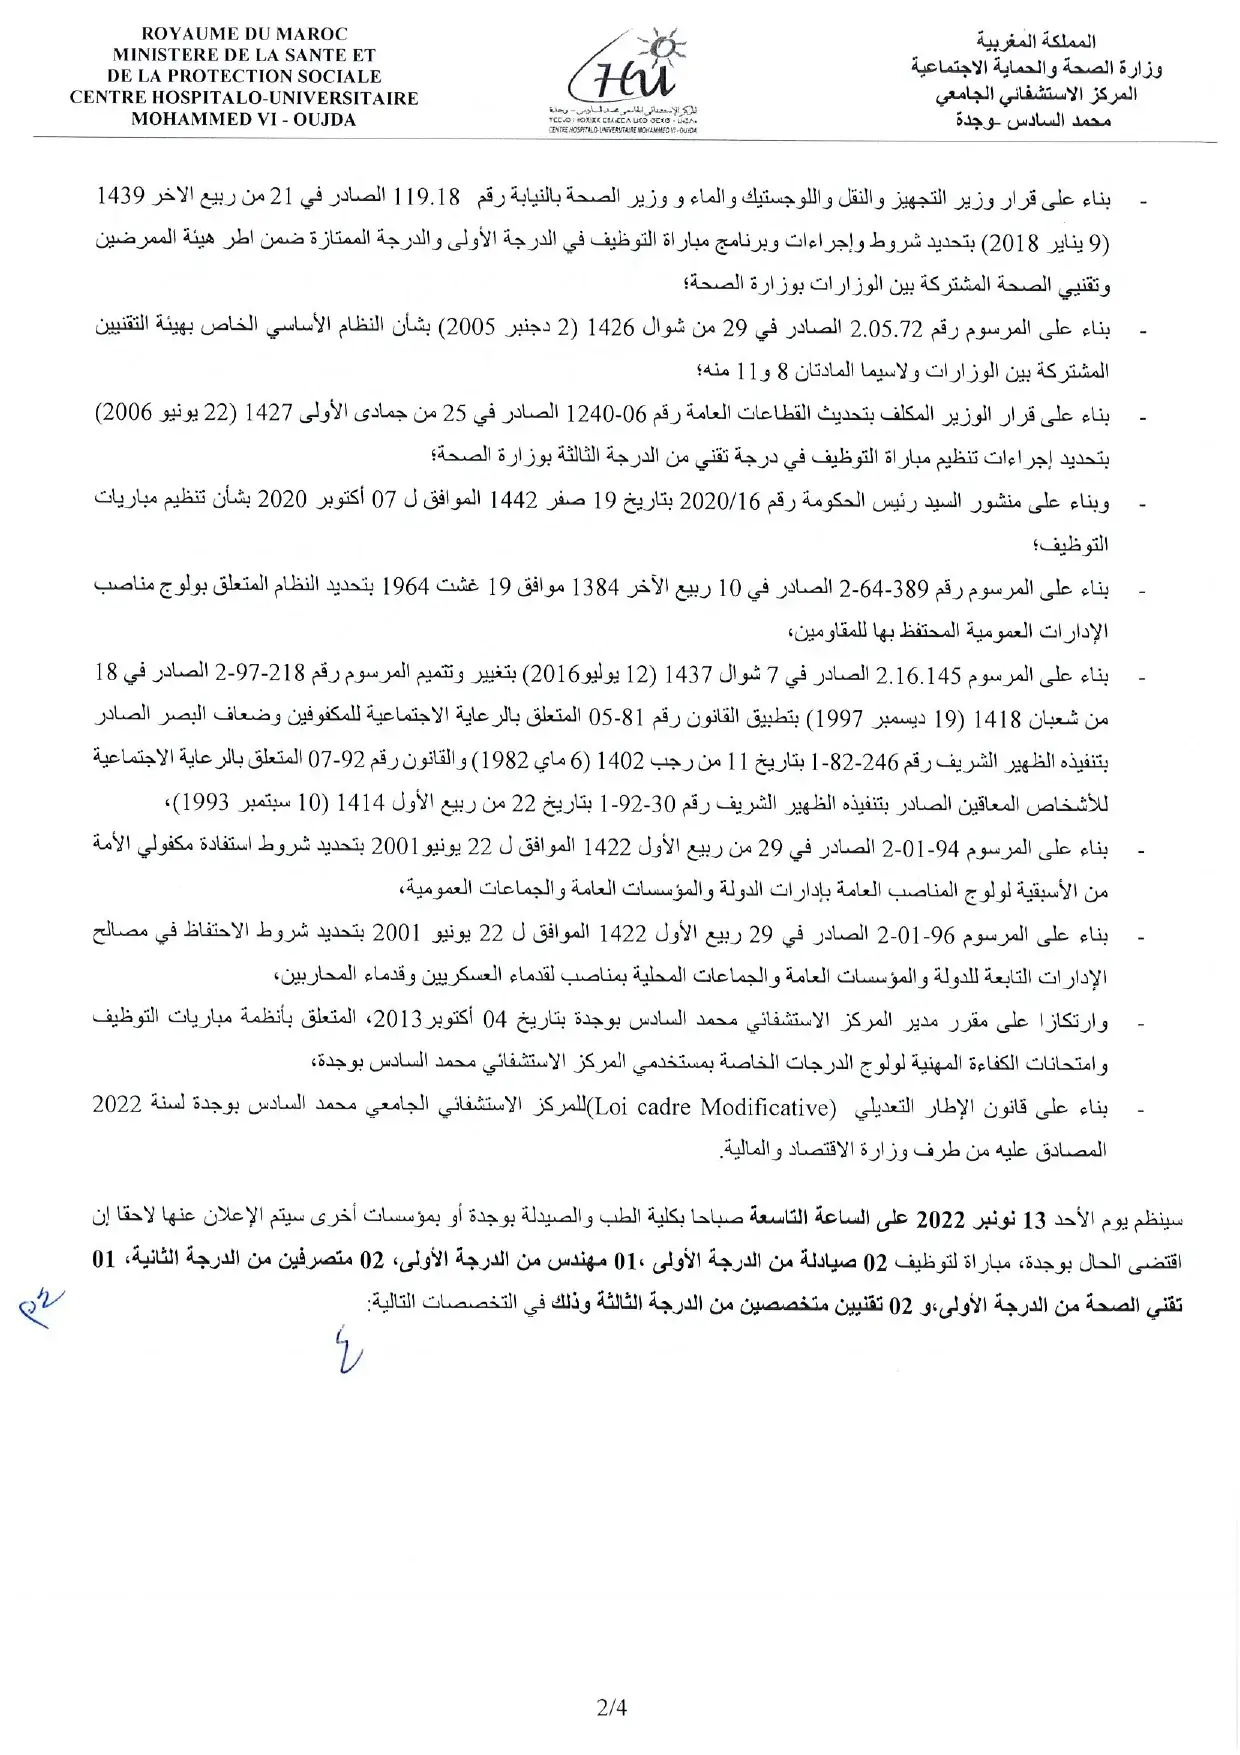 Concours de recrutement CHU Mohemed VI Oujda 2022